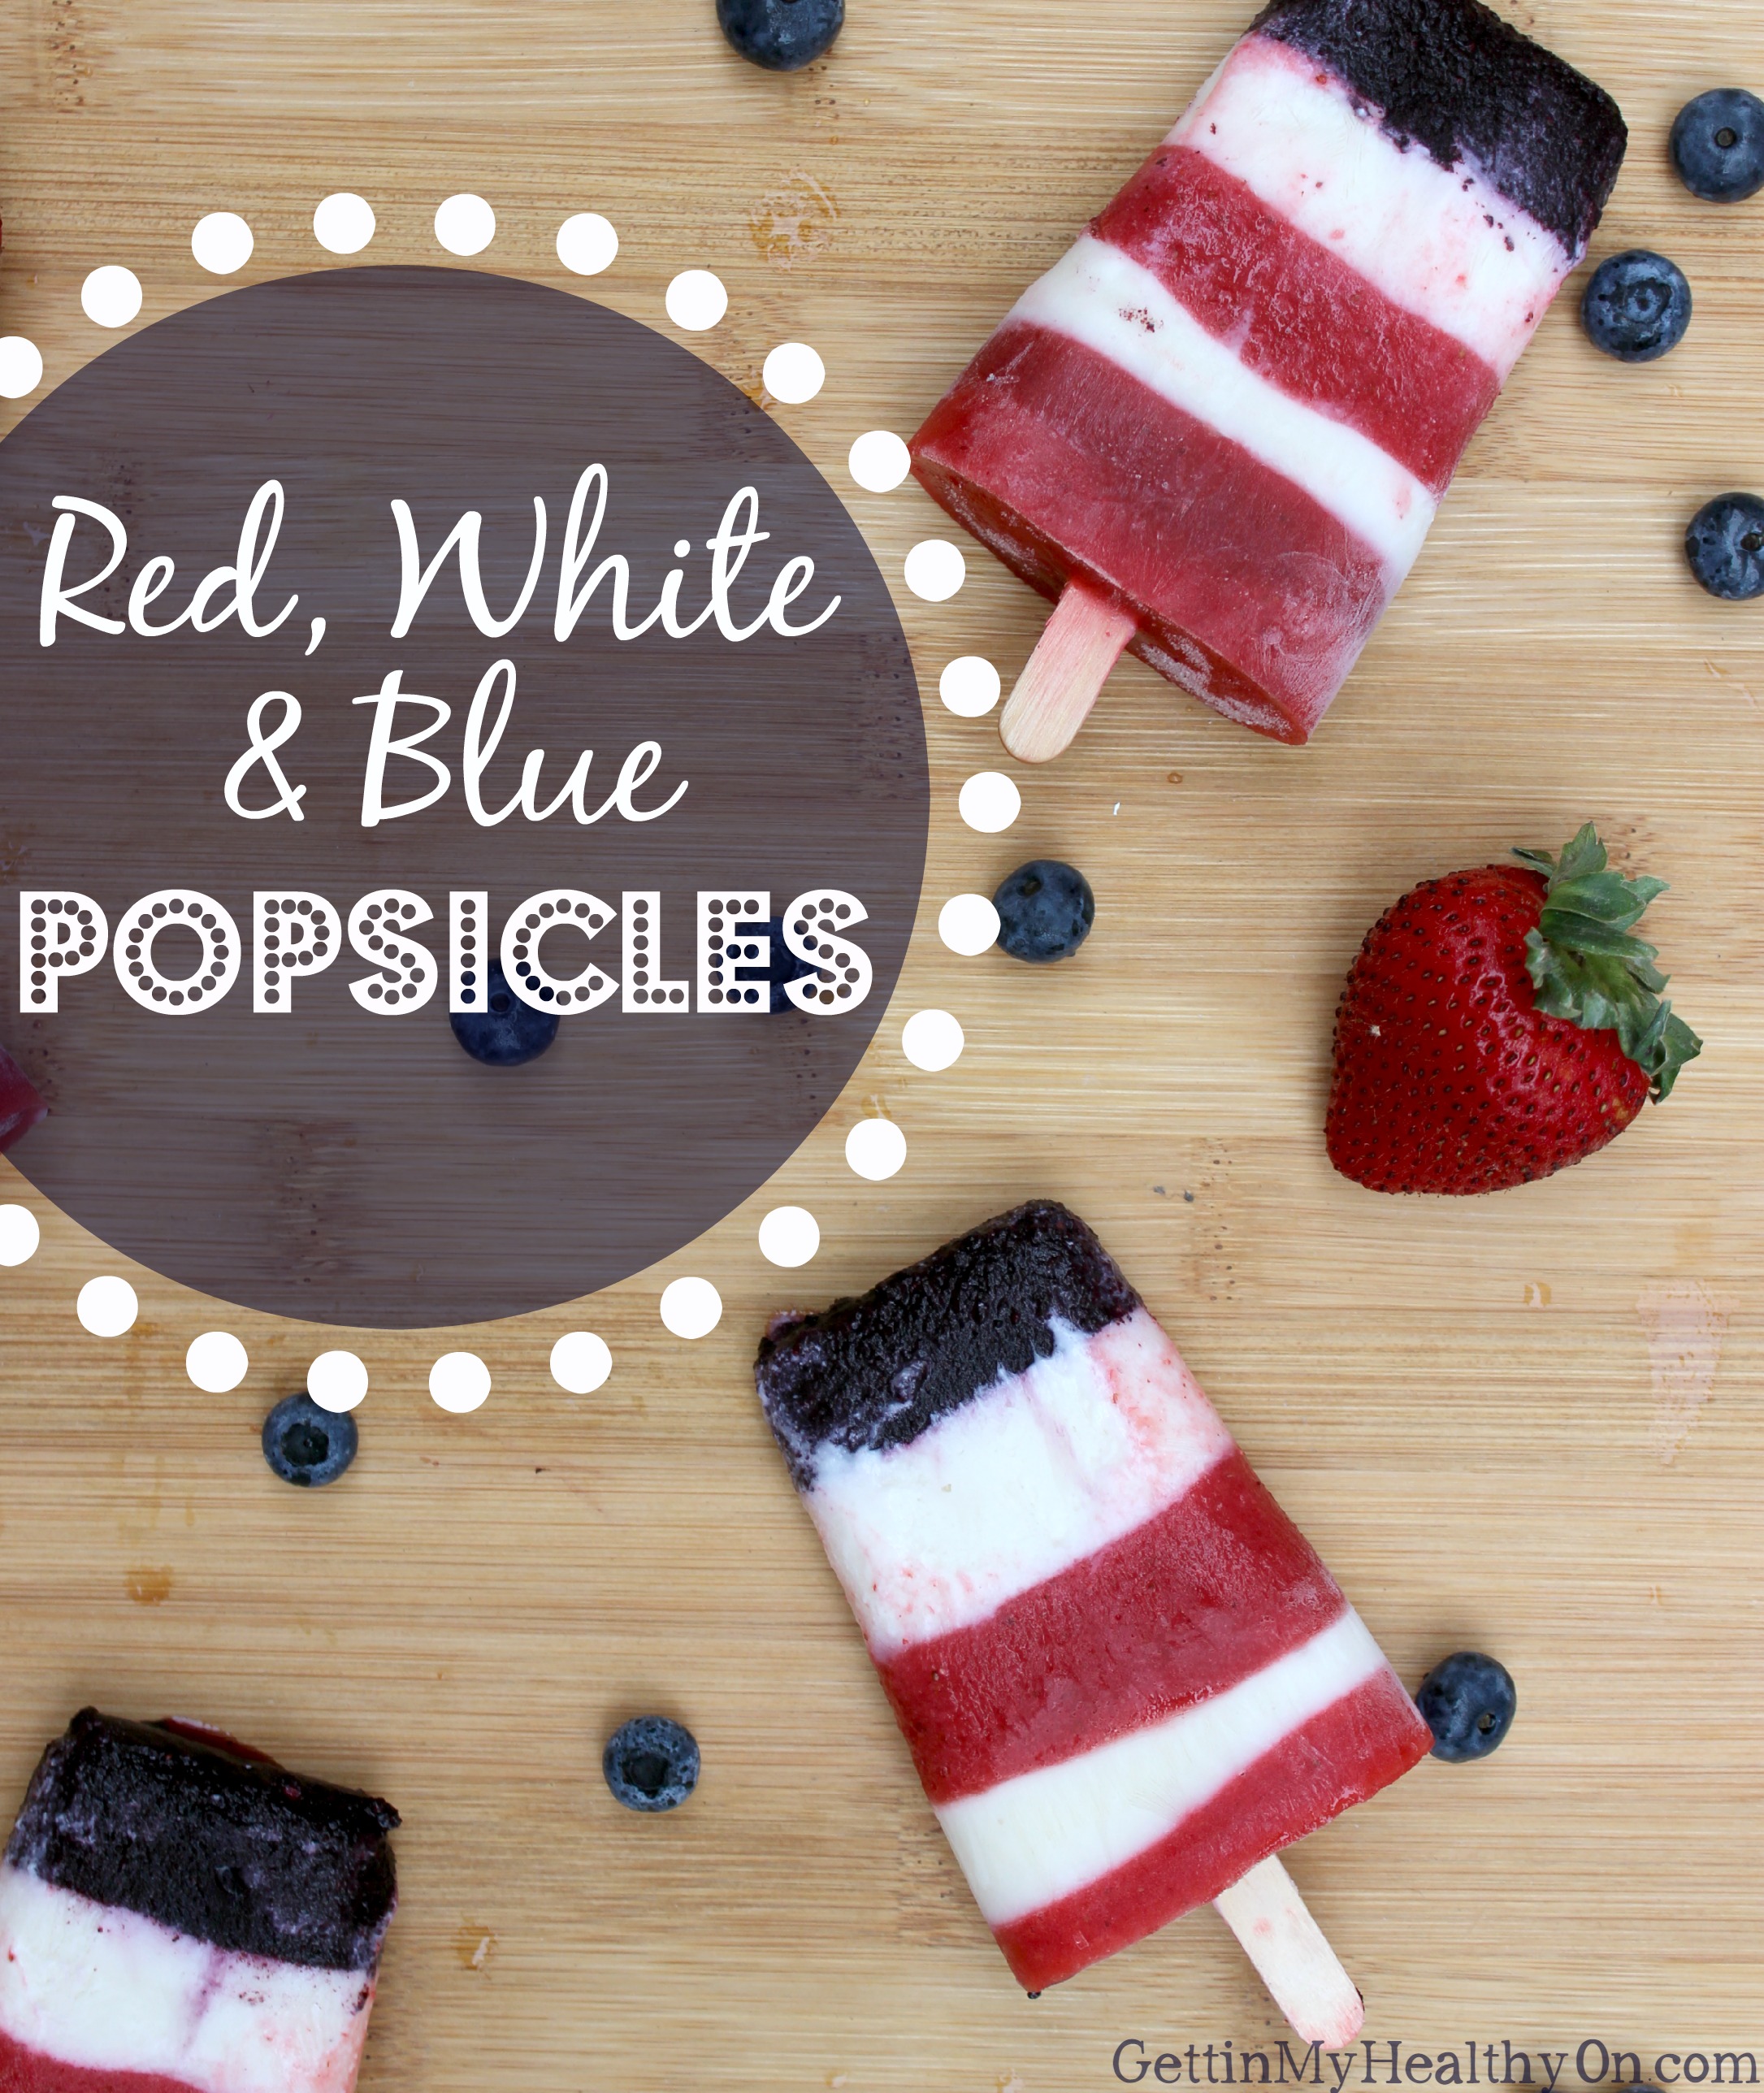 Red, White & Blue Popsicles